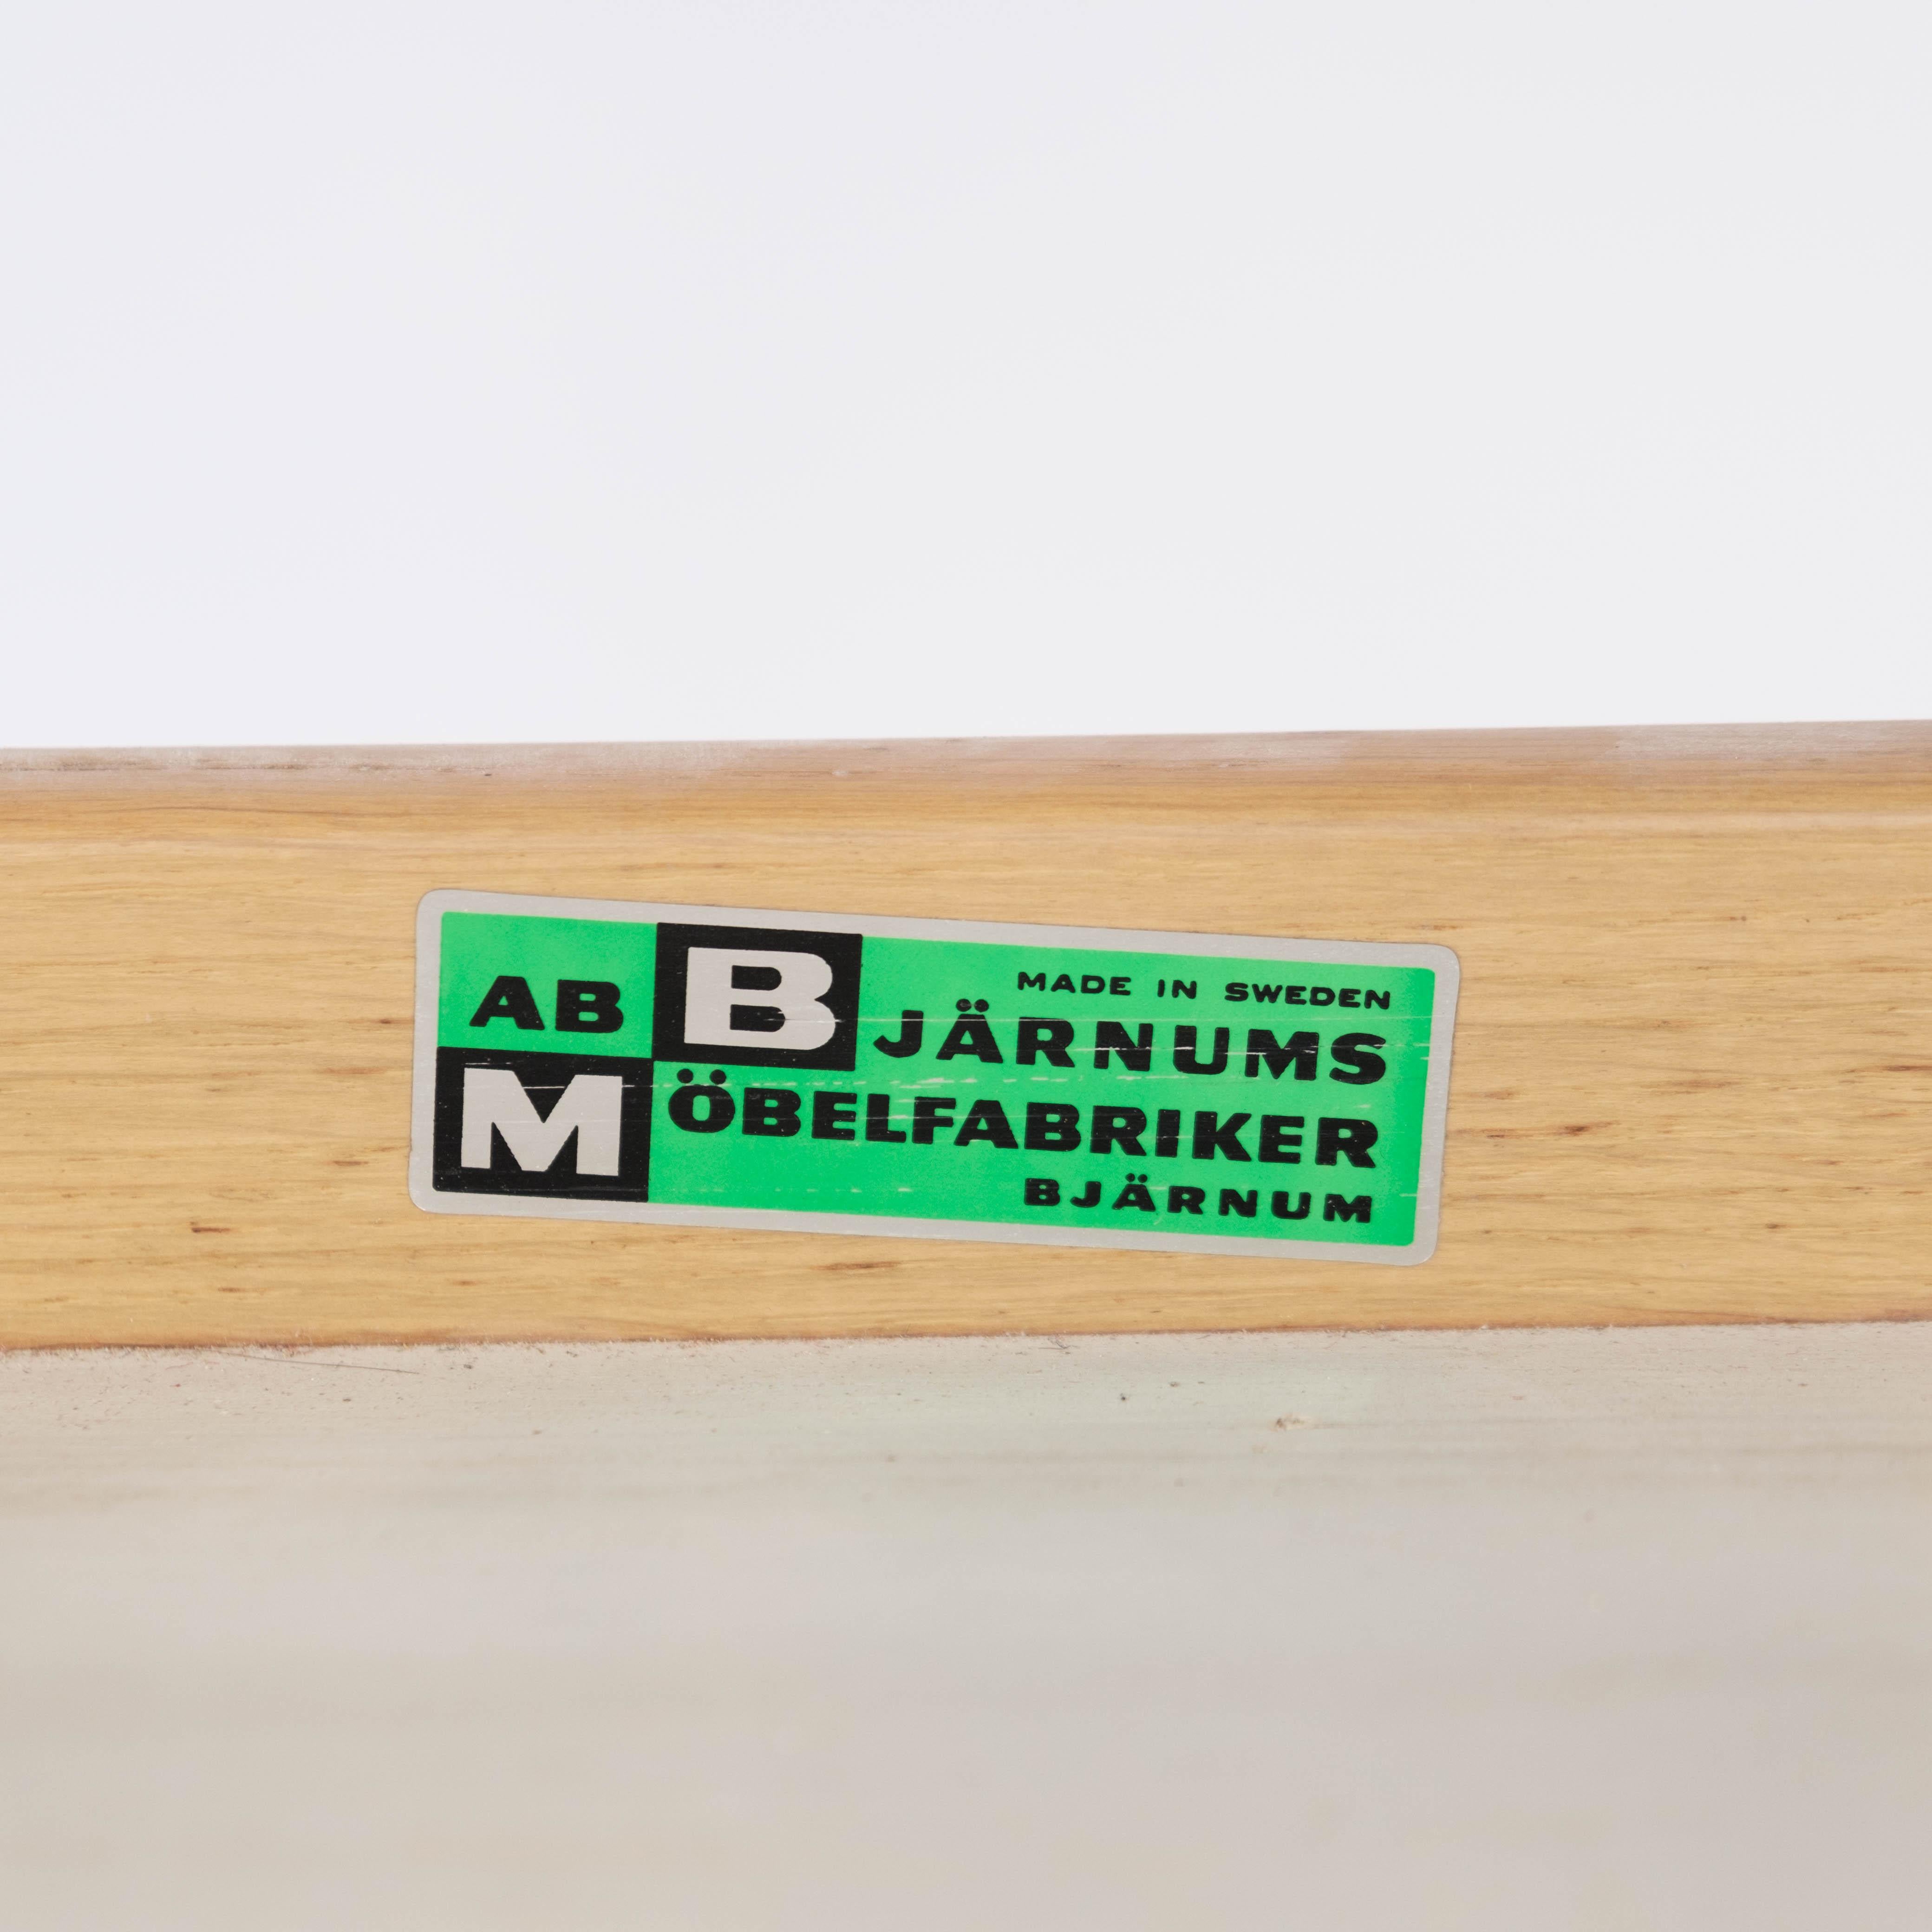 Armchair in Oak of Swedish Design Manufactured by Bjärnums Furniture, 1960s For Sale 5